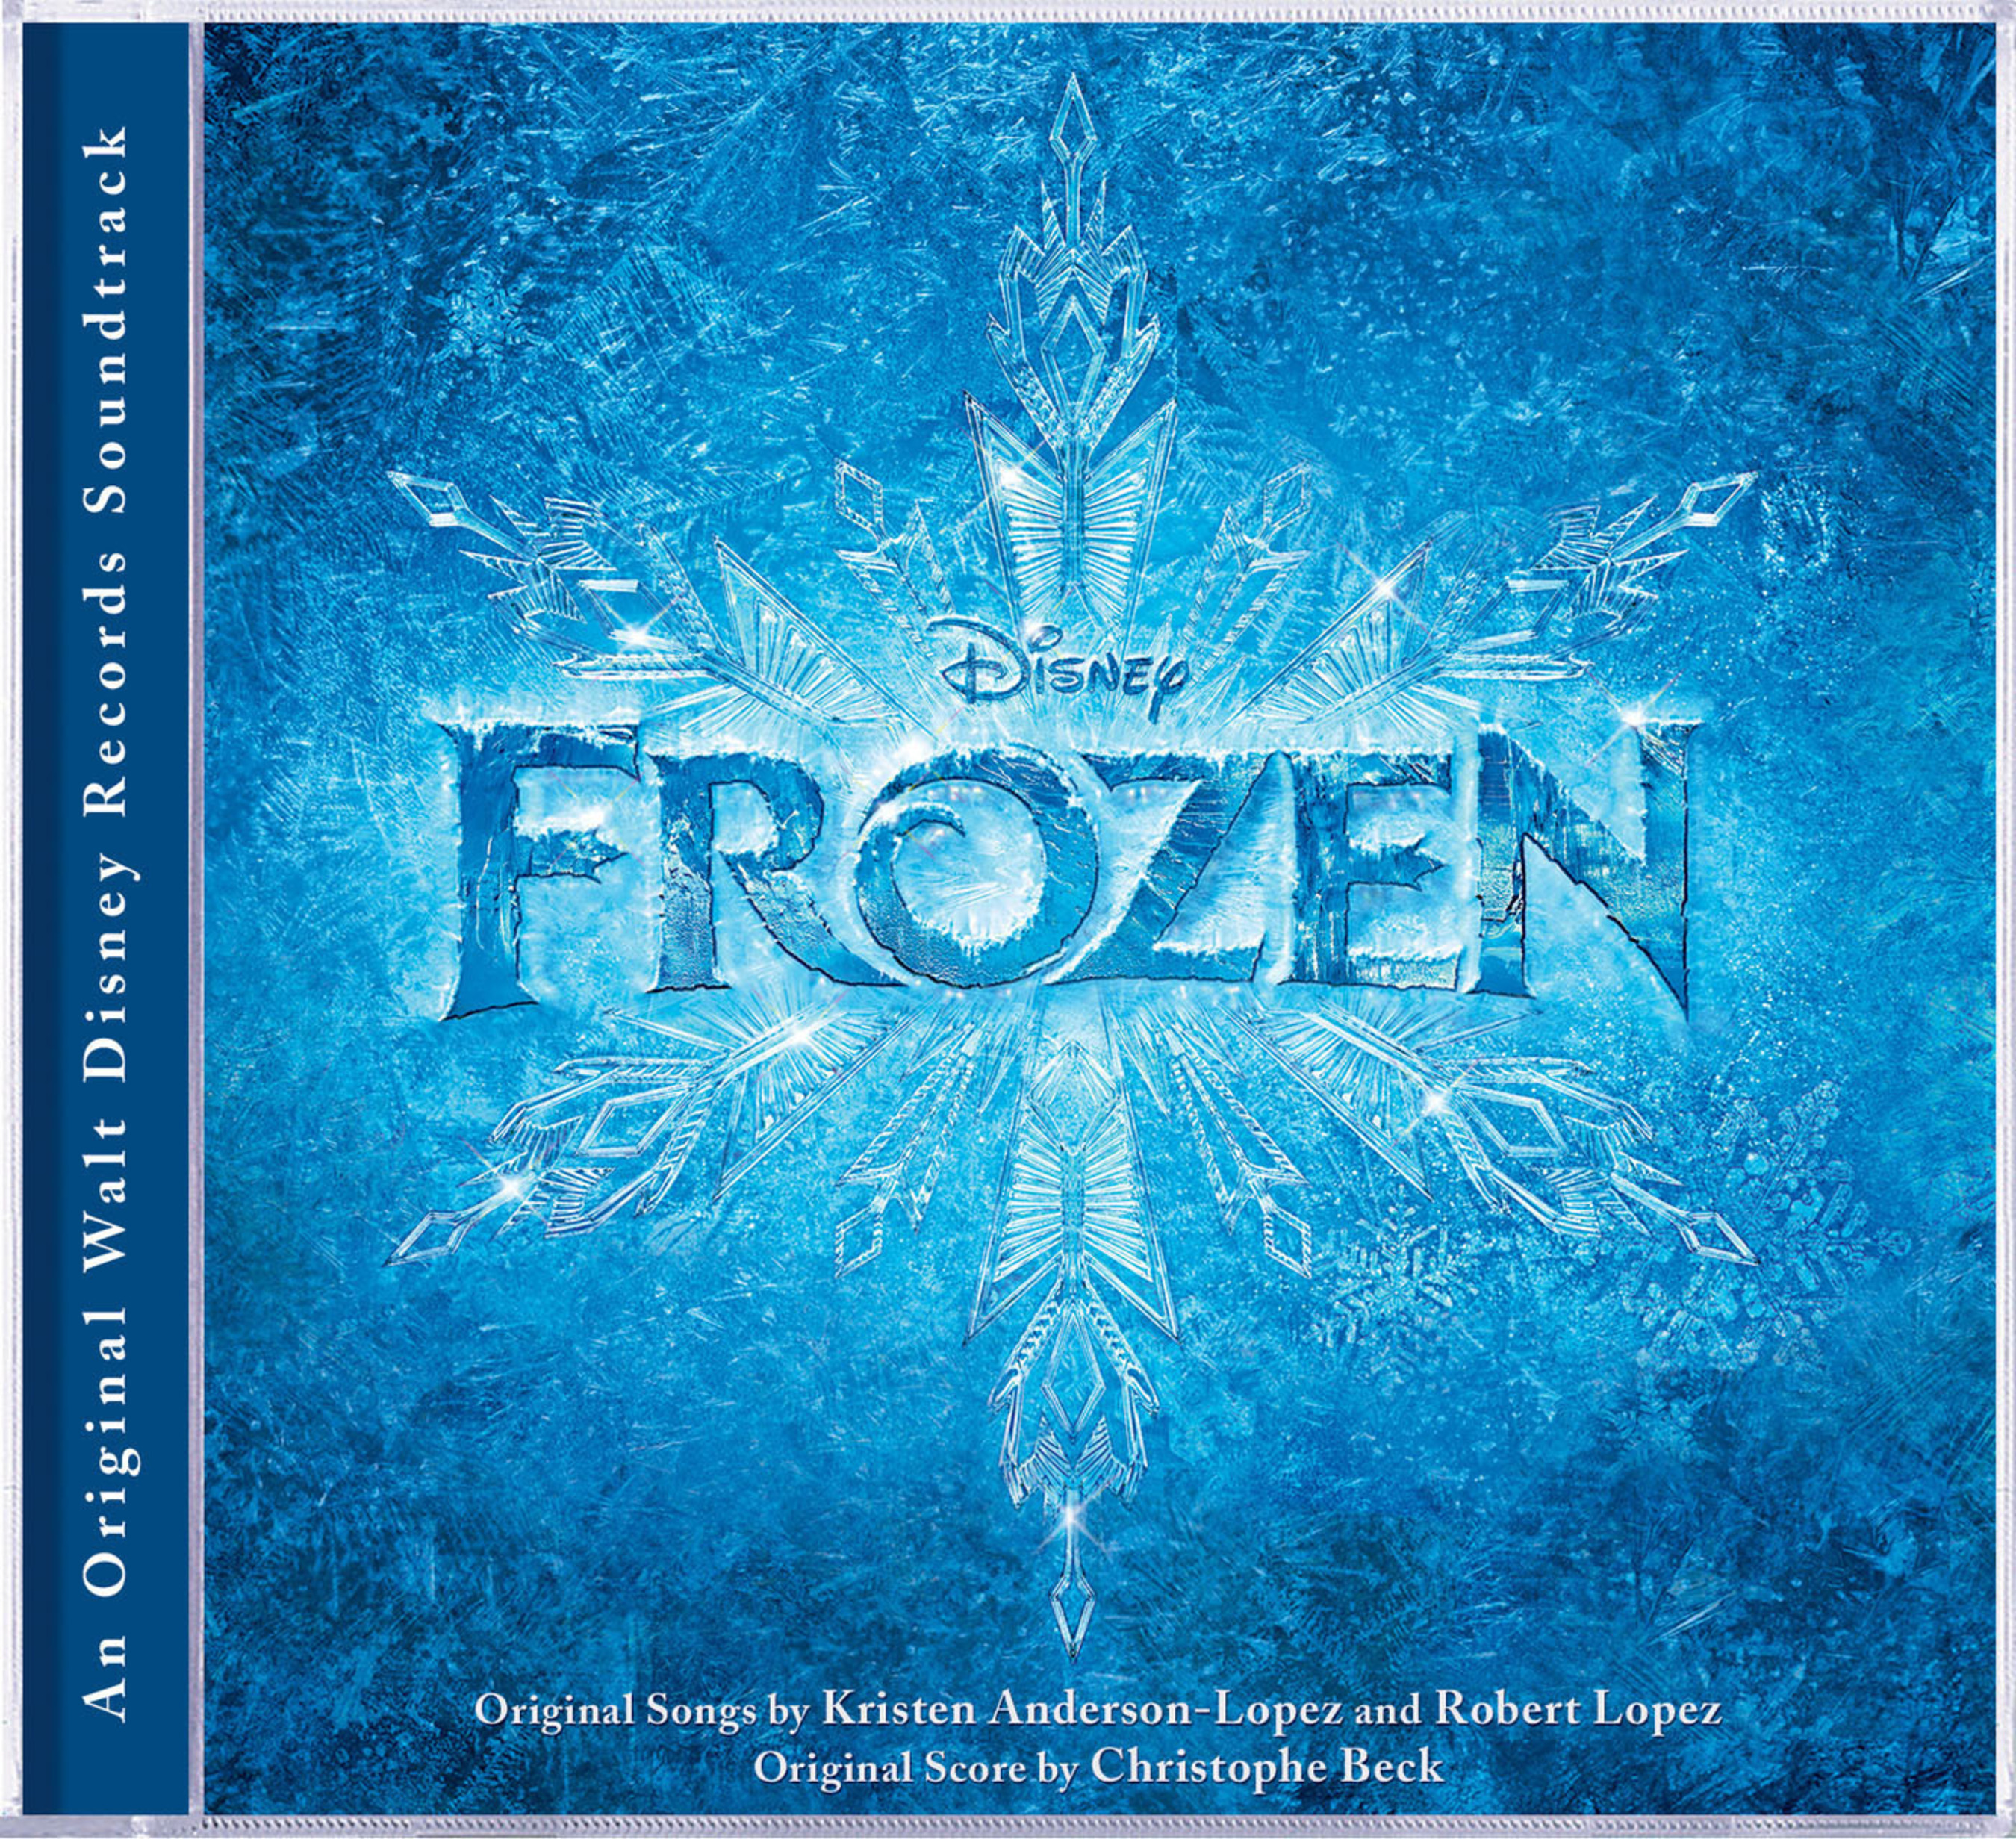 Frozen soundtrack cover. (PRNewsFoto/Walt Disney Records) (PRNewsFoto/WALT DISNEY RECORDS)